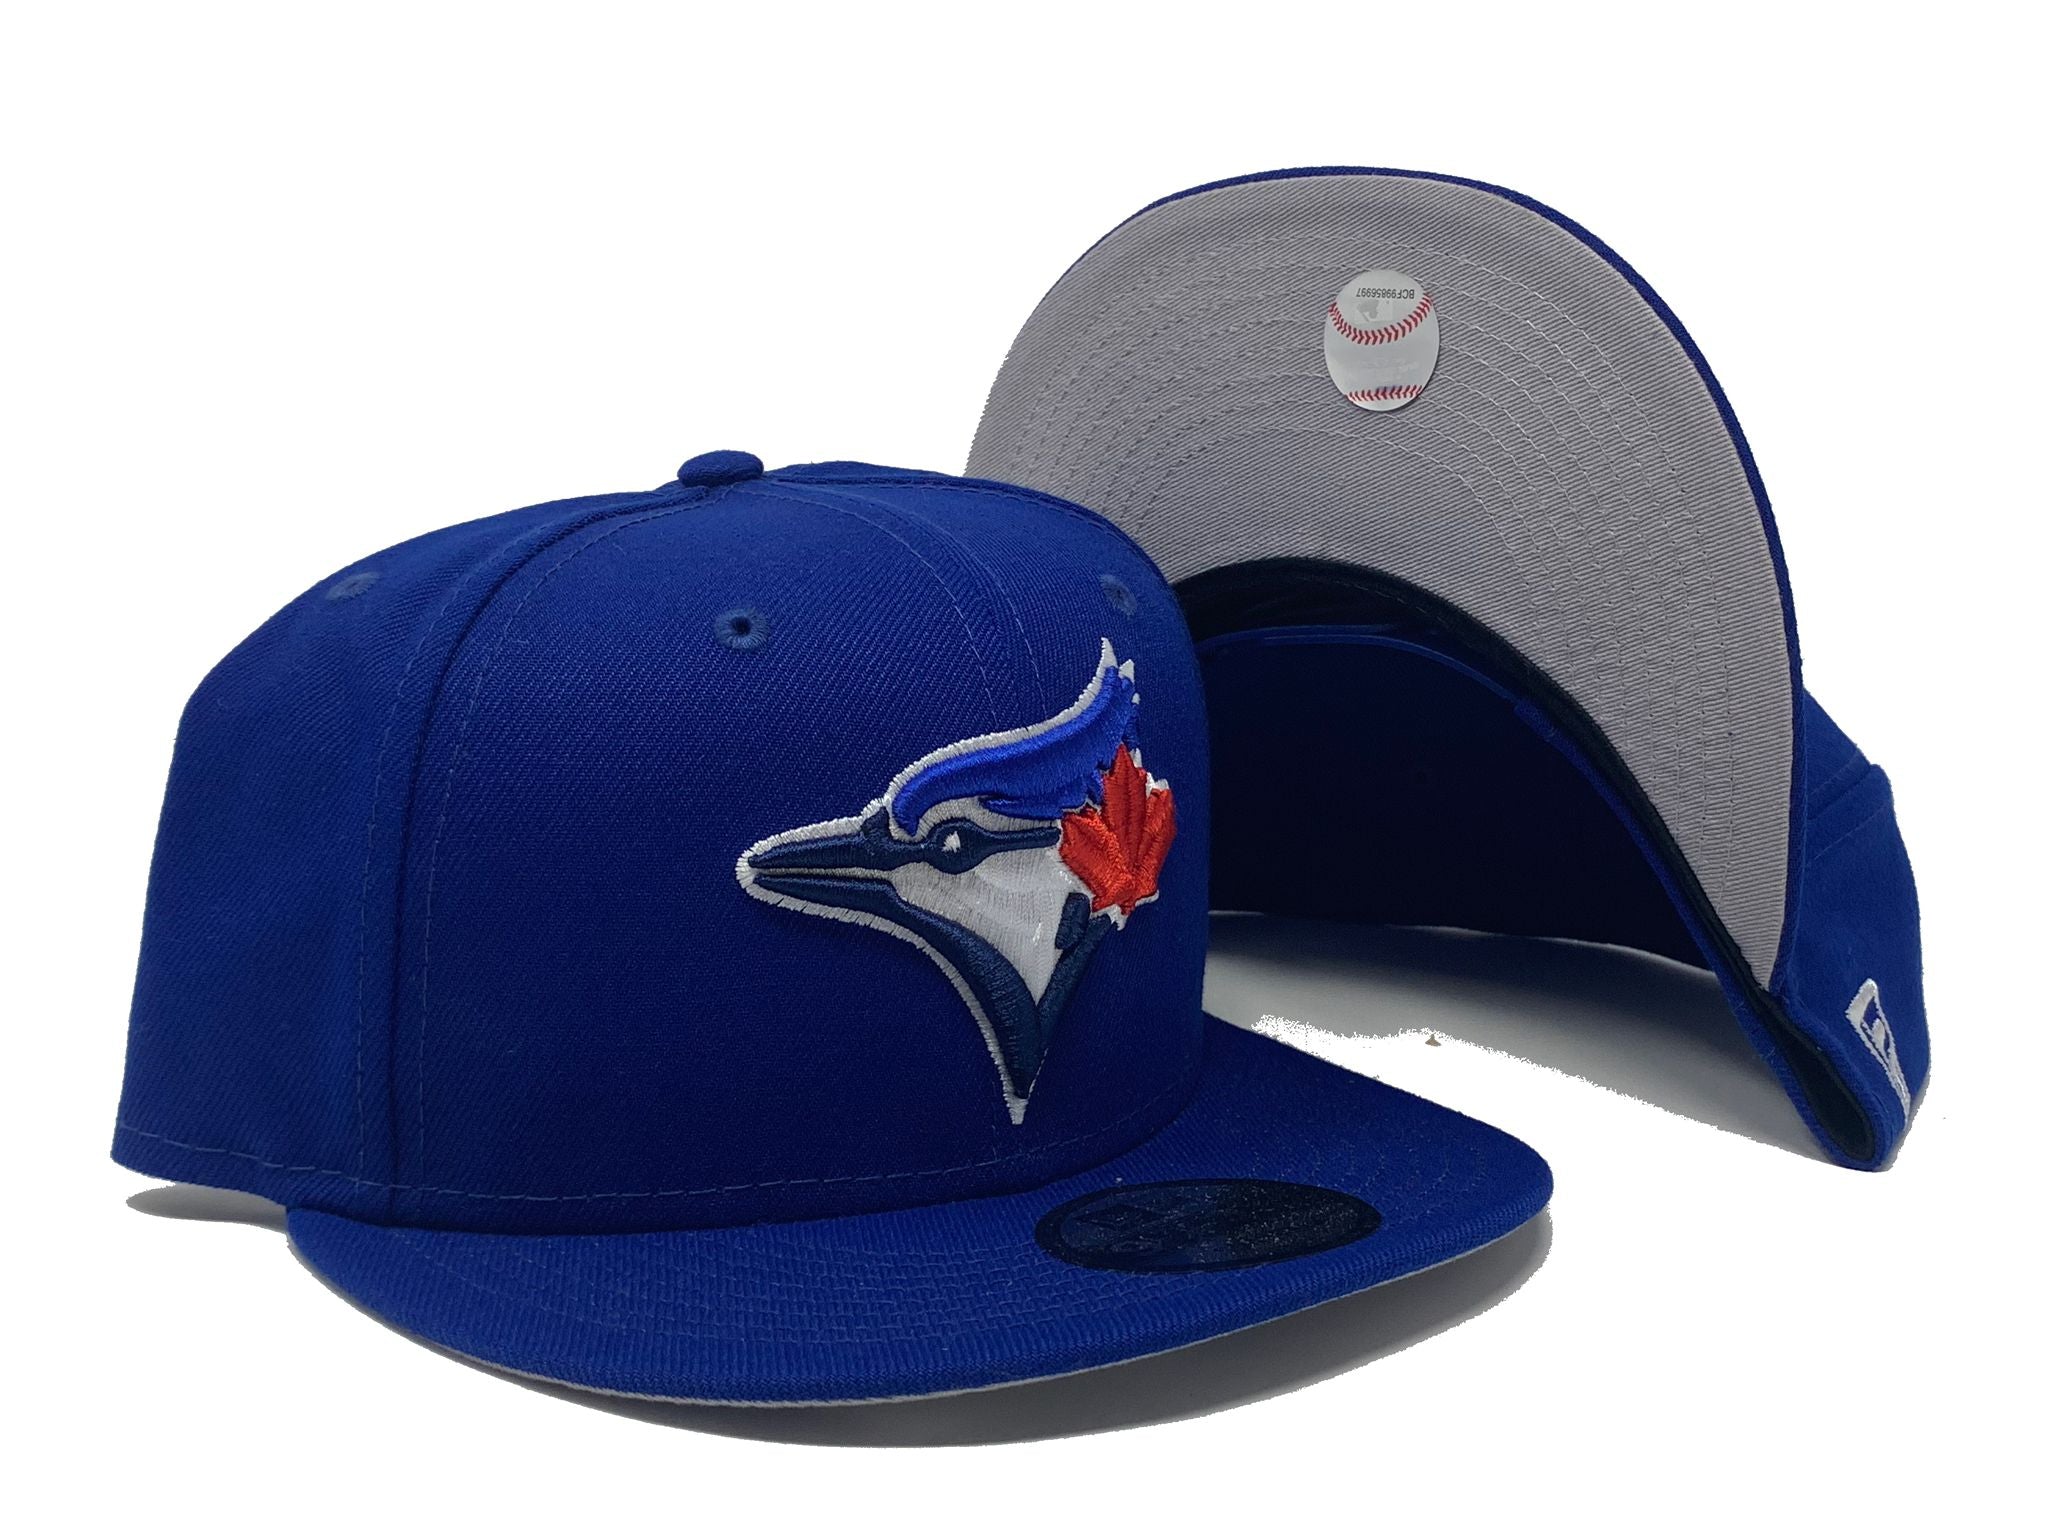 Toronto Blue Jays Hats in Toronto Blue Jays Team Shop 